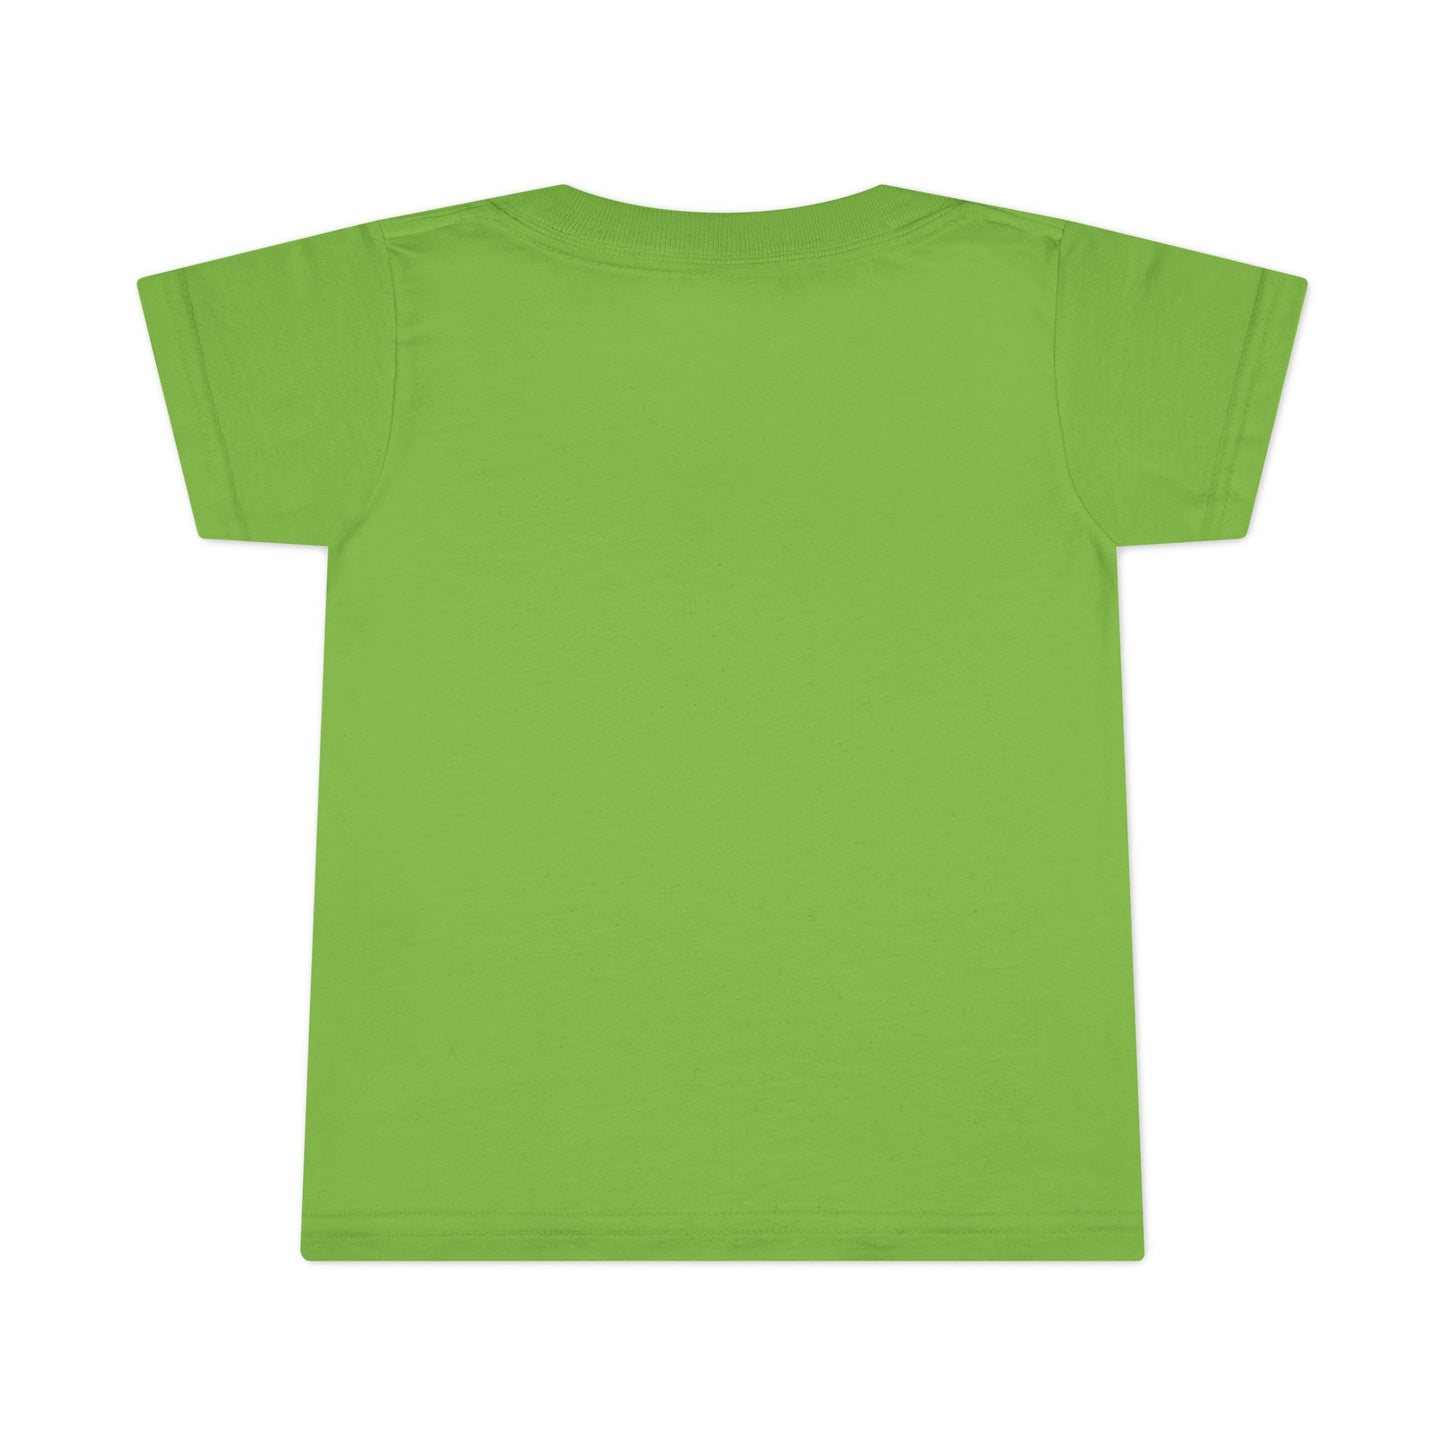 Toddler T-shirt - My MN Minnesota - Customizable Logo